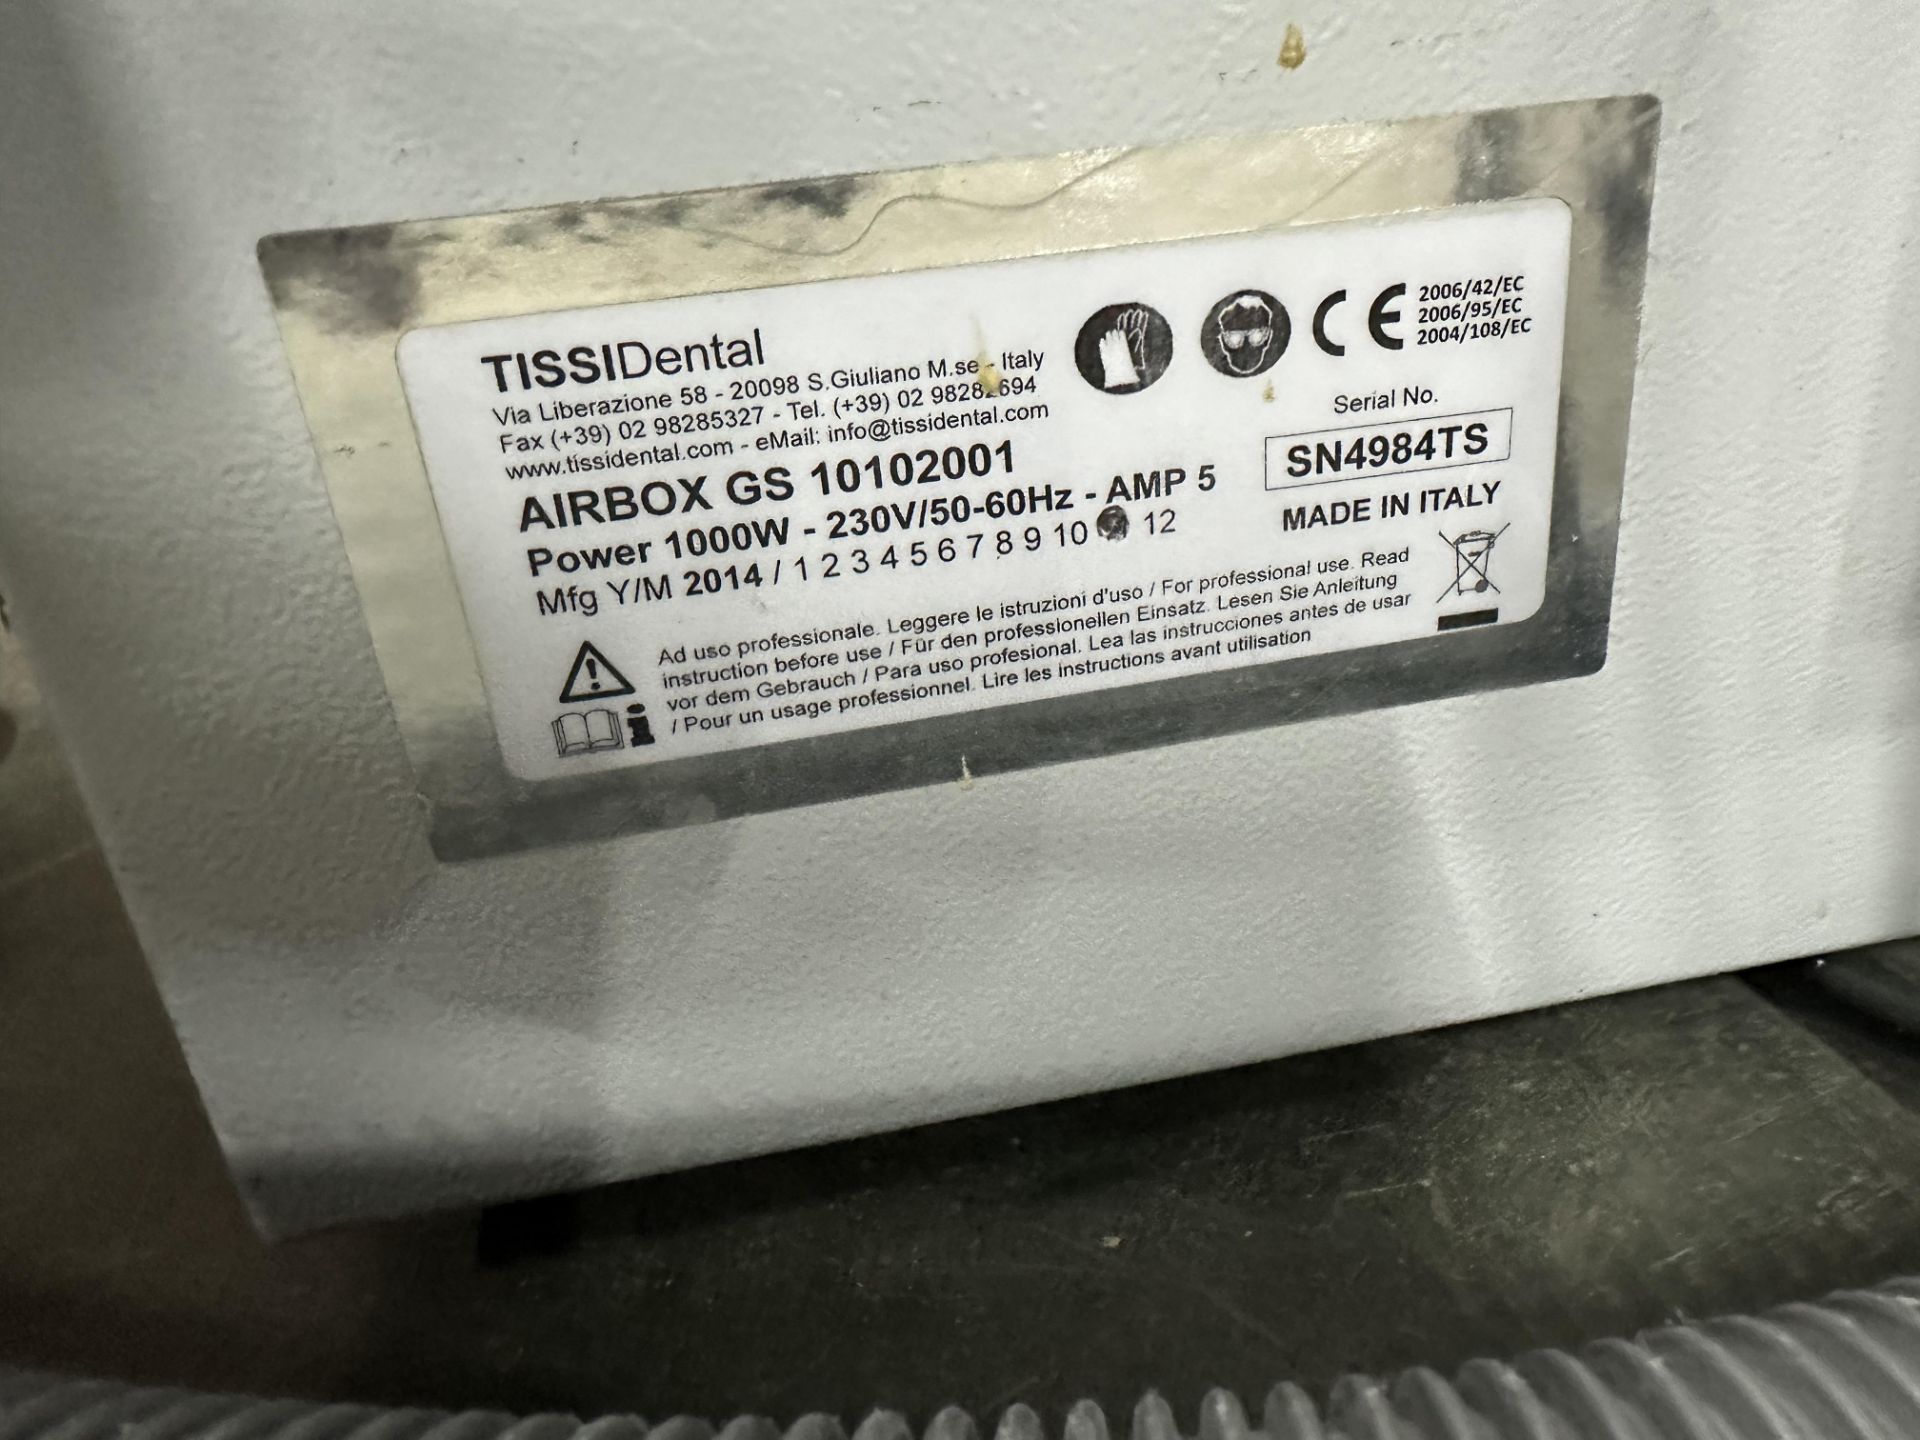 Airbox GS TISSIDental airbag powder filter - Image 3 of 3